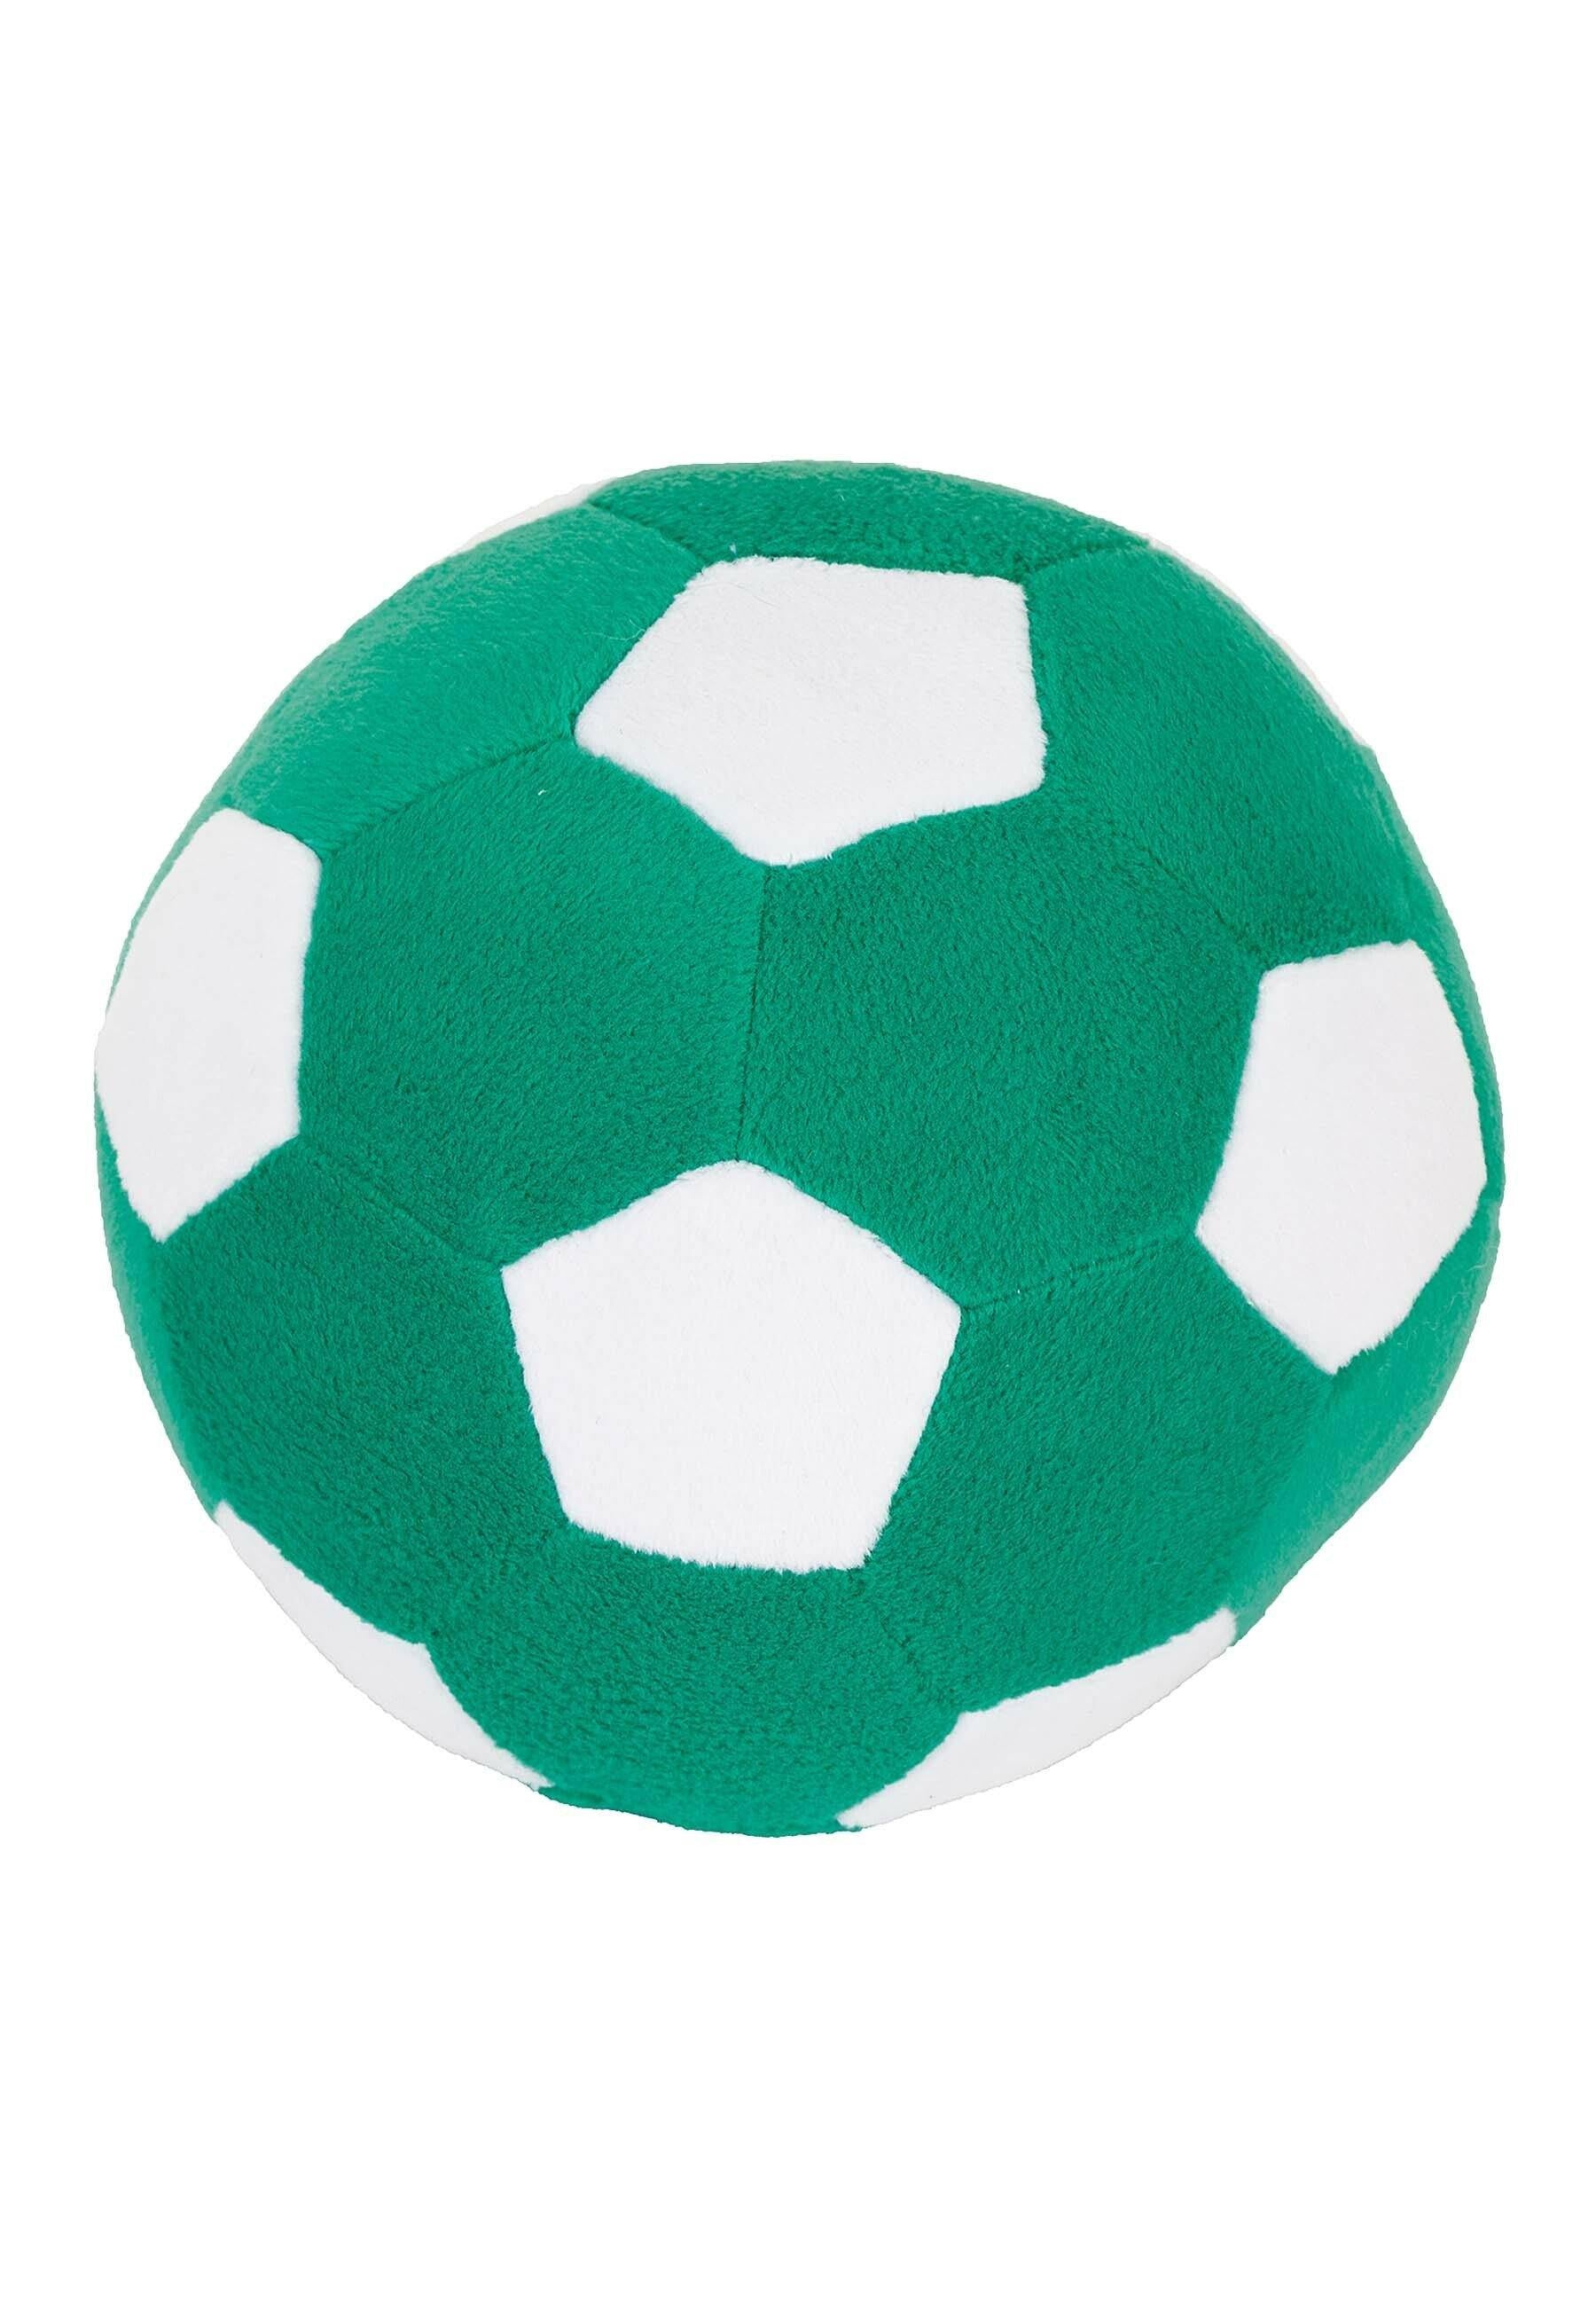 Ball grün/weiß Bälle - Sterntaler GmbH